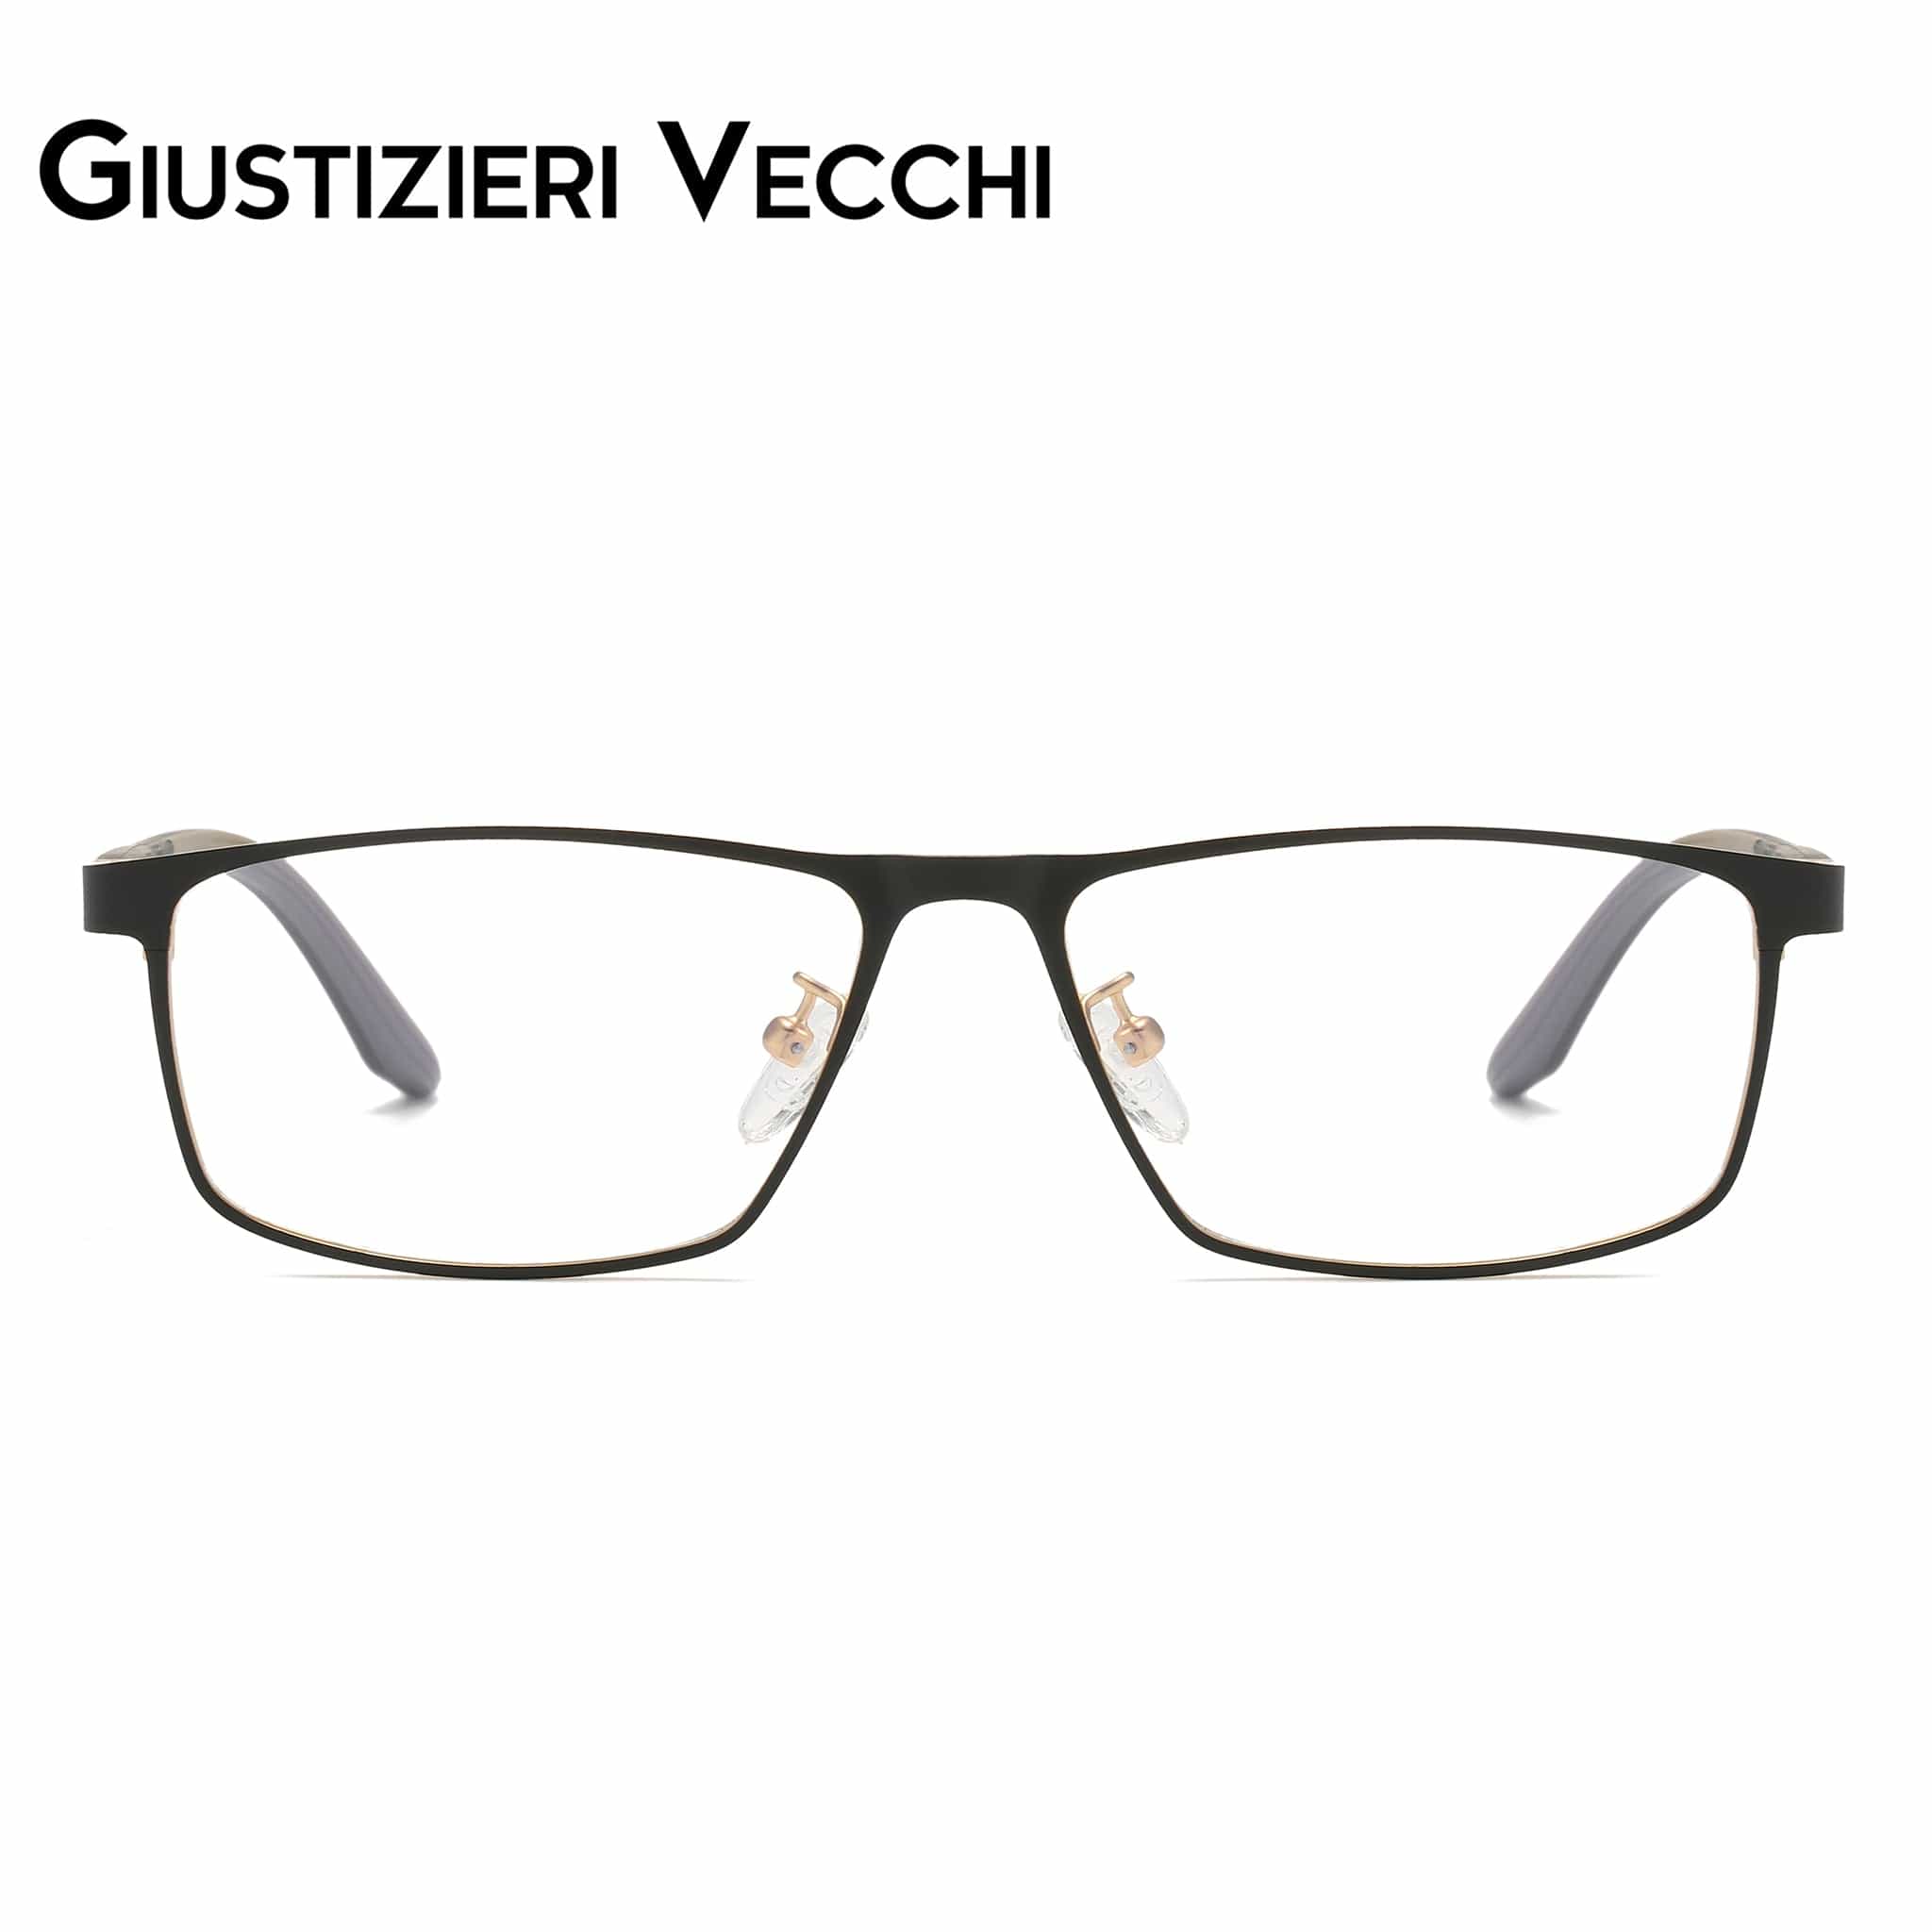 GIUSTIZIERI VECCHI Eyeglasses Large / Black with Brown IceStorm Duo